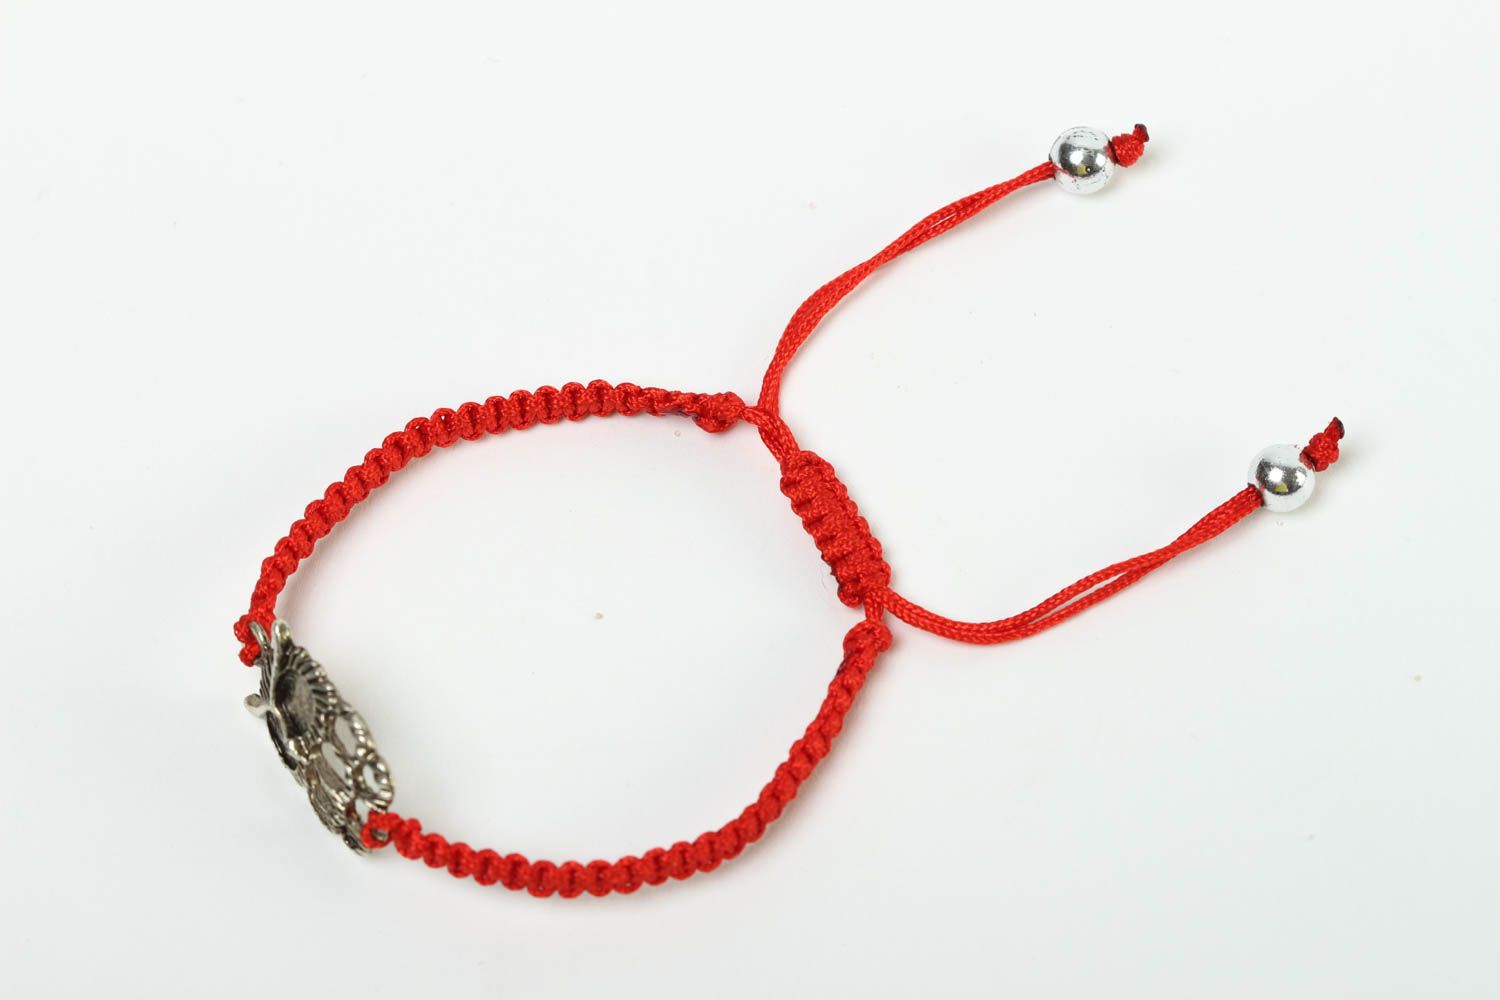 Handmade woven thread bracelet textile bracelet designs cool jewelry gift ideas photo 2